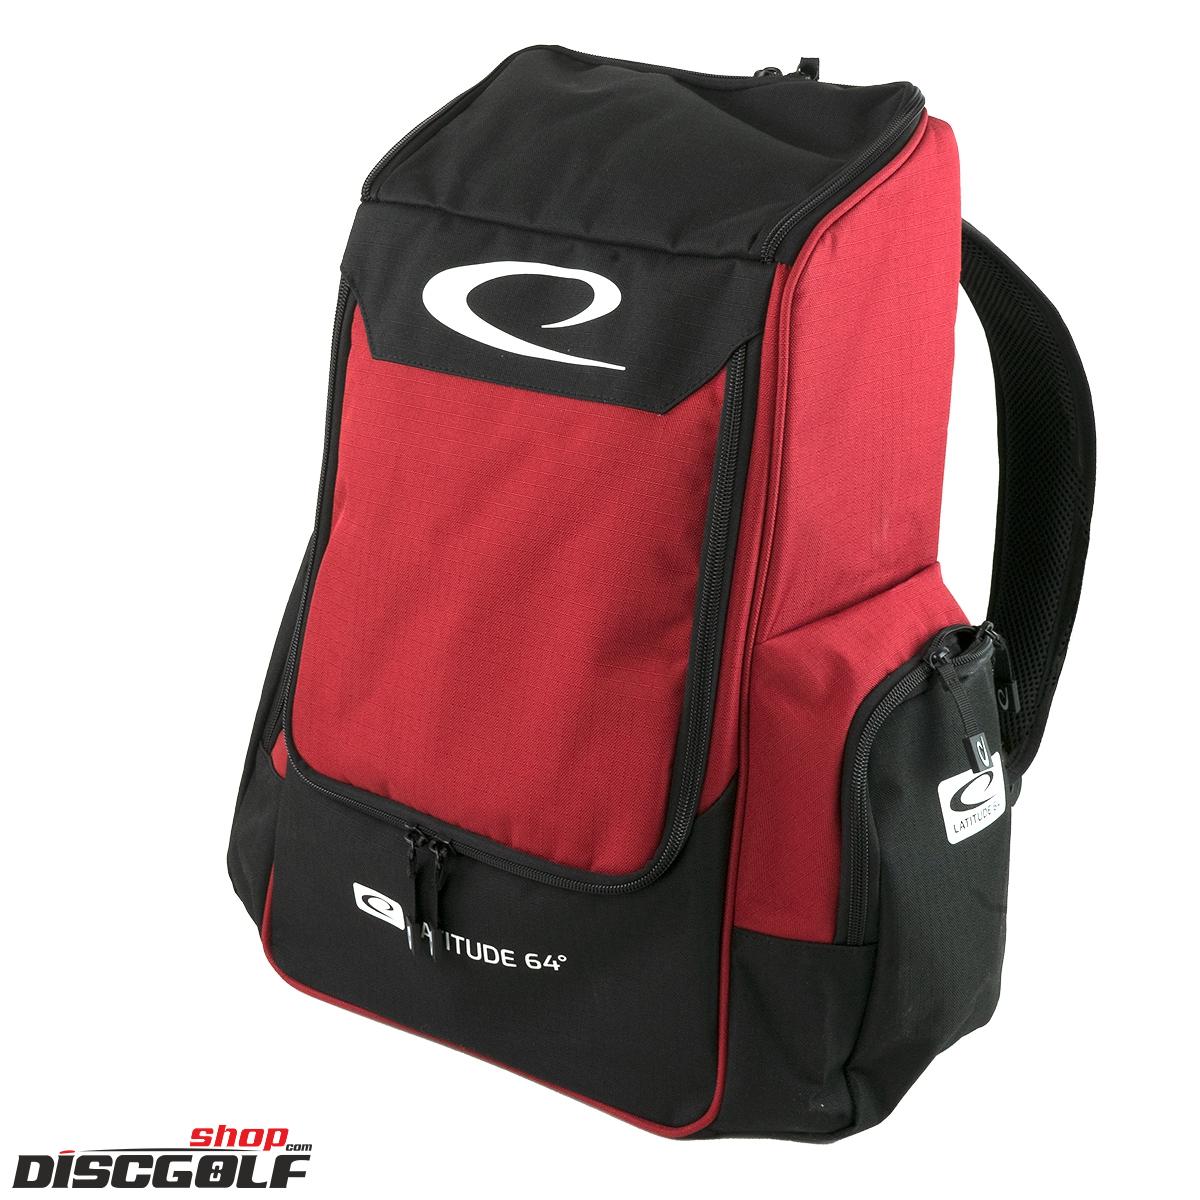 Latitude 64º Core Backpack V.3 - Černo-červená/Black-rave-red (discgolf)